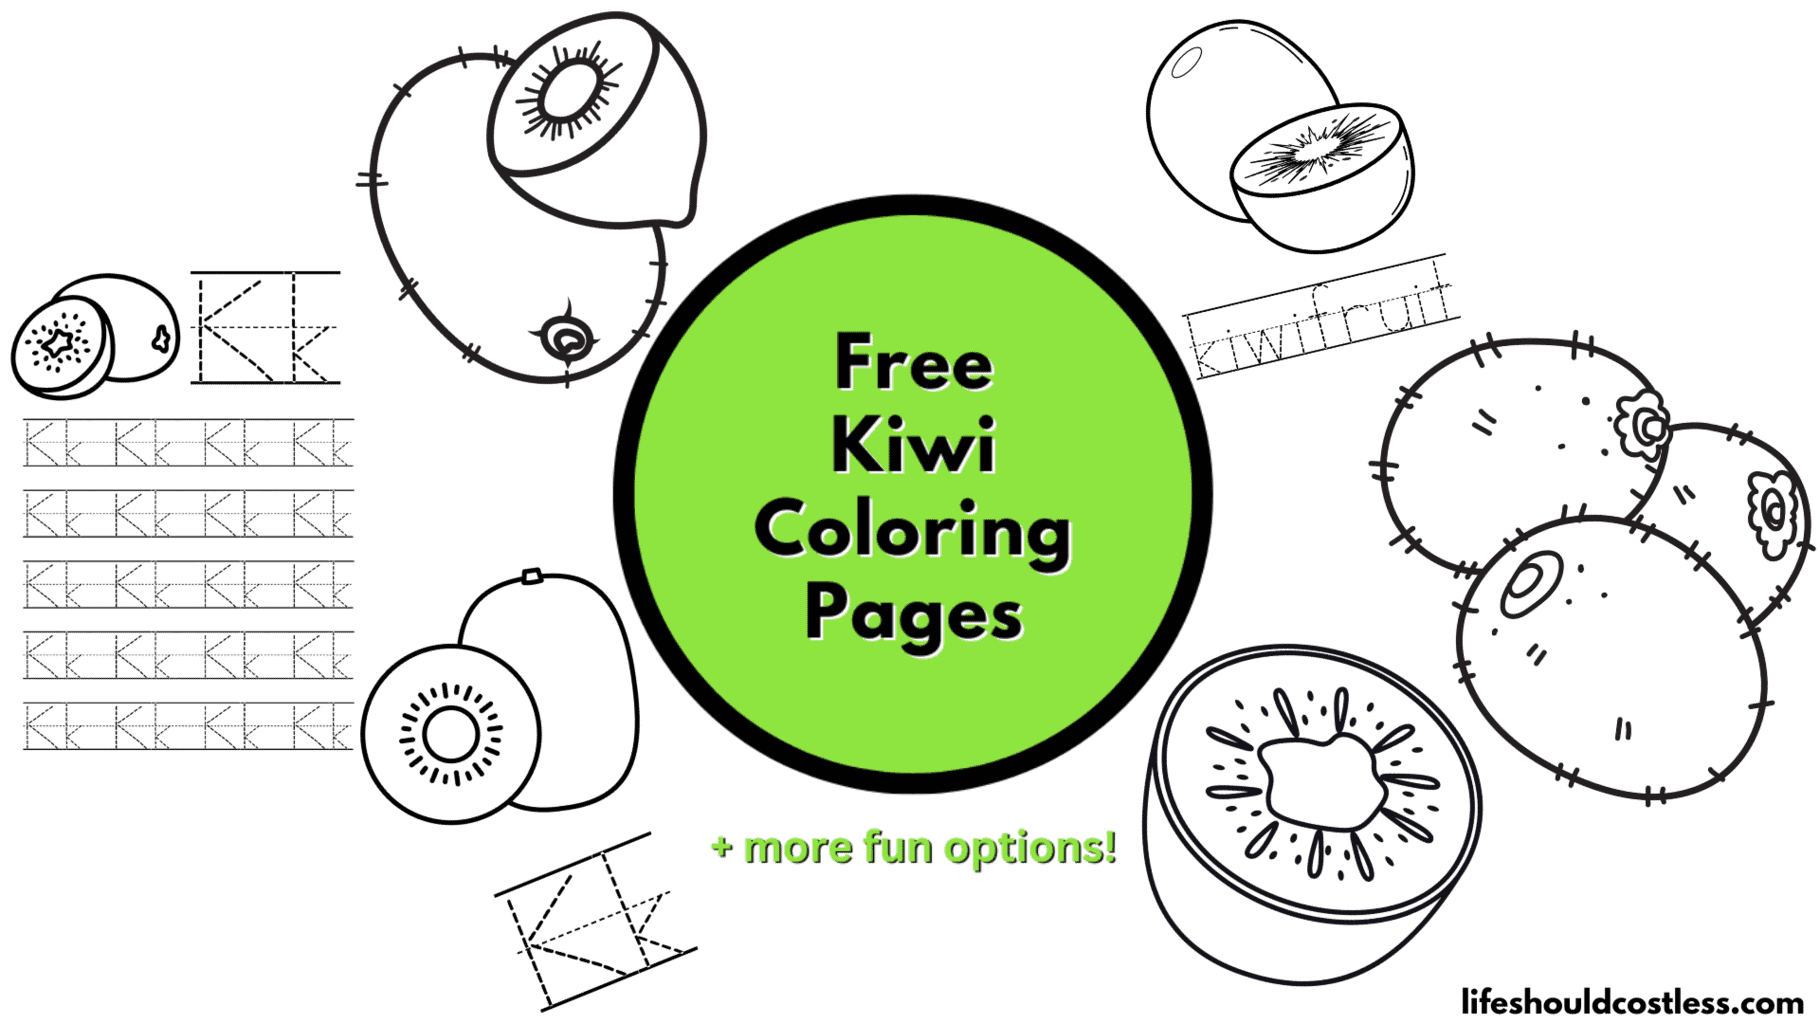 Kiwi coloring pages free printable pdf templates